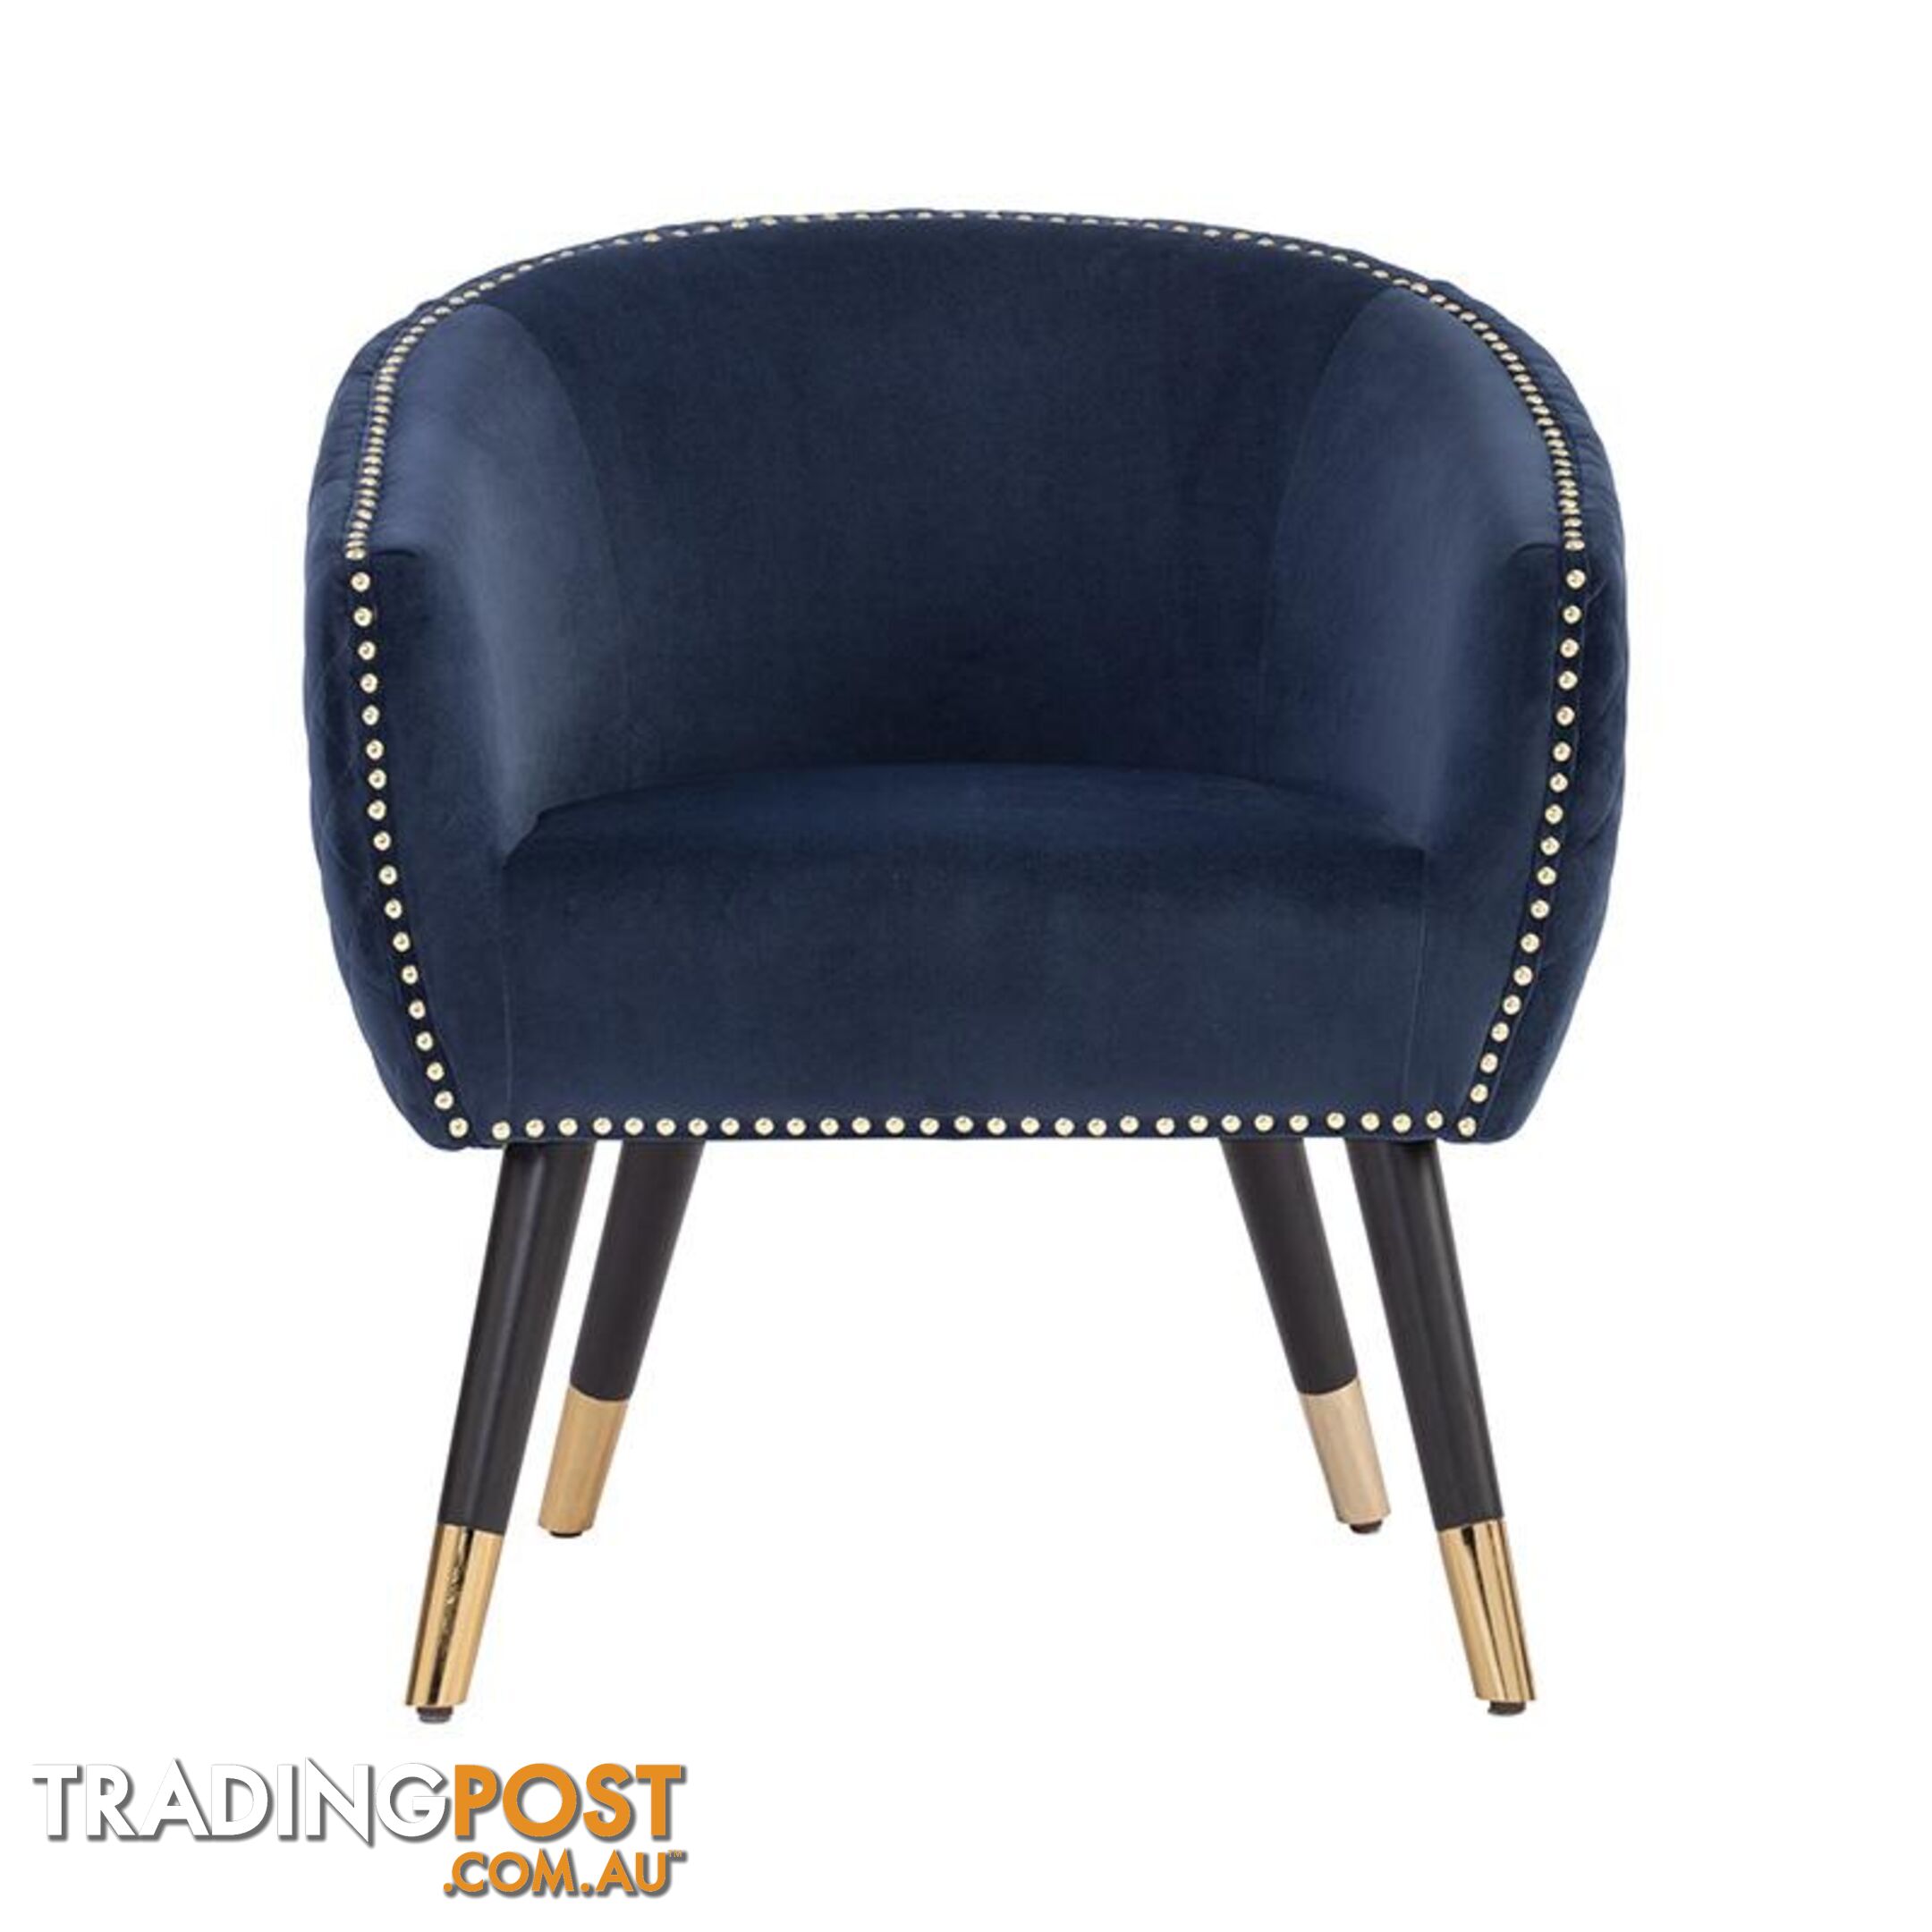 DENIZ Lounge Chair - Navy - 231225 - 9334719001036